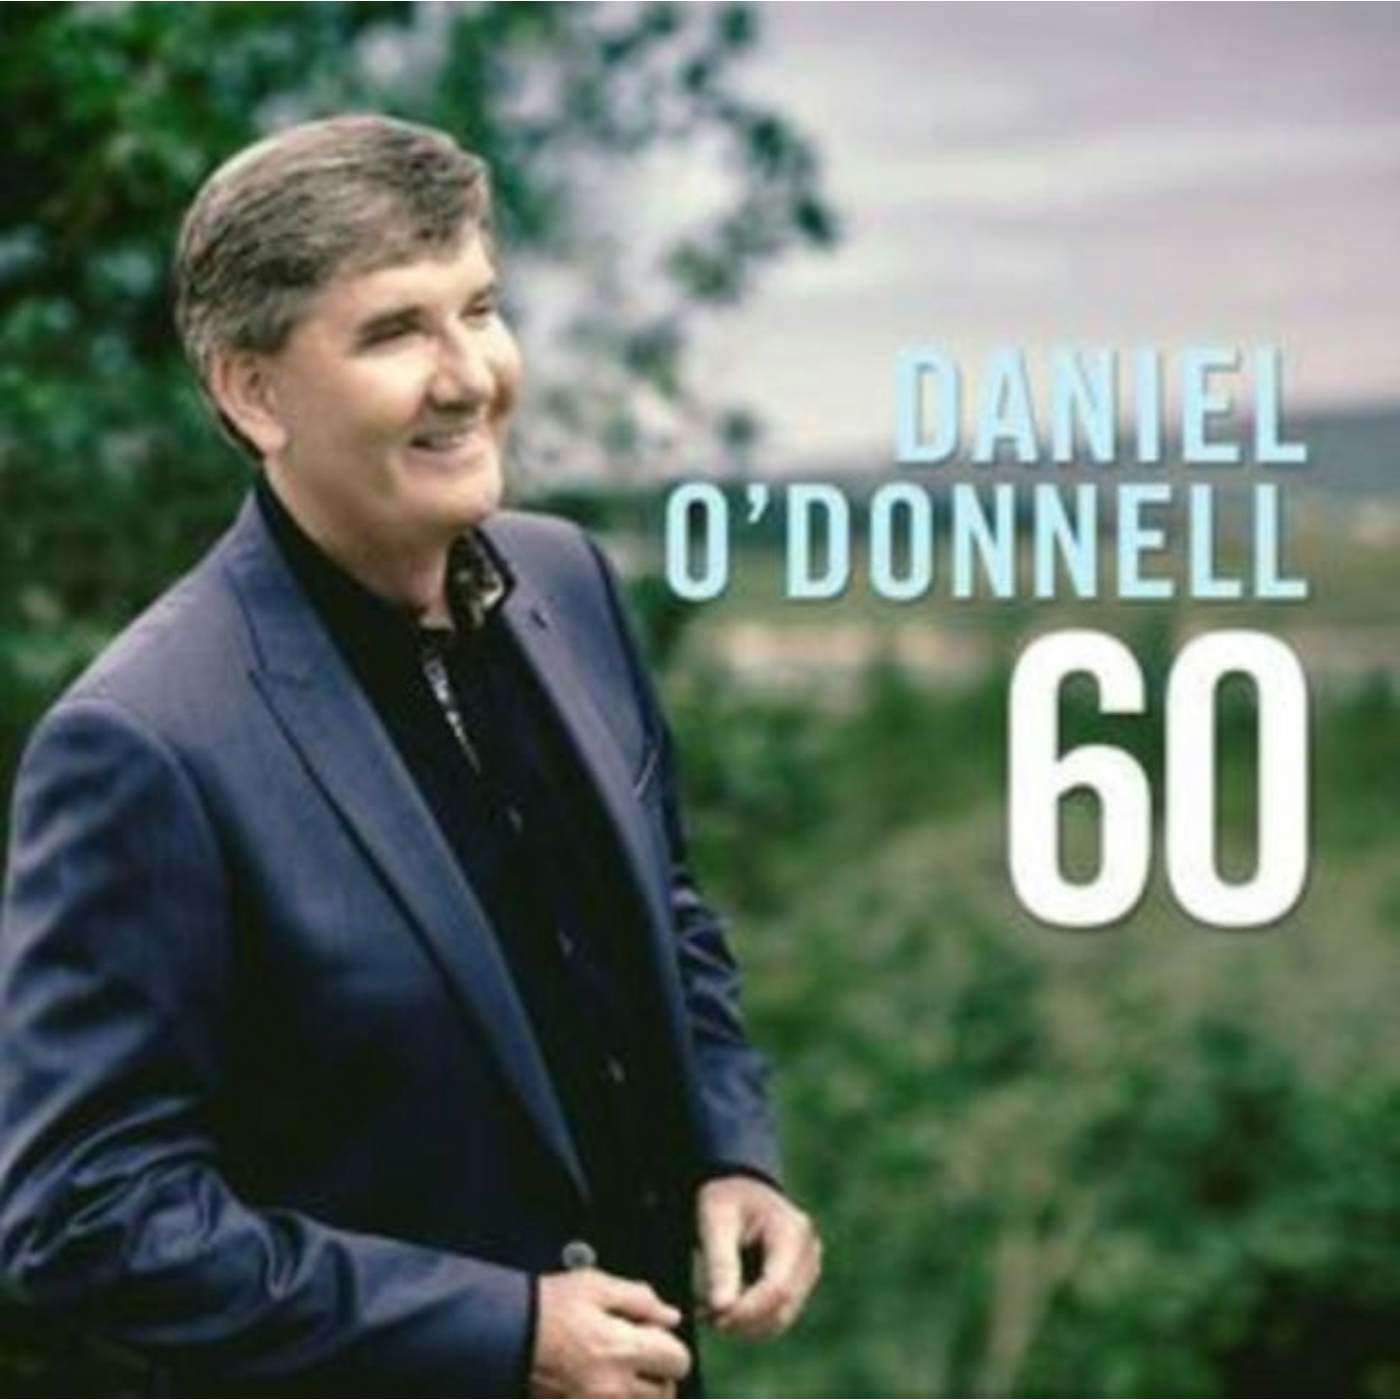 Daniel O'Donnell LP Vinyl Record - 60 (Green Vinyl)